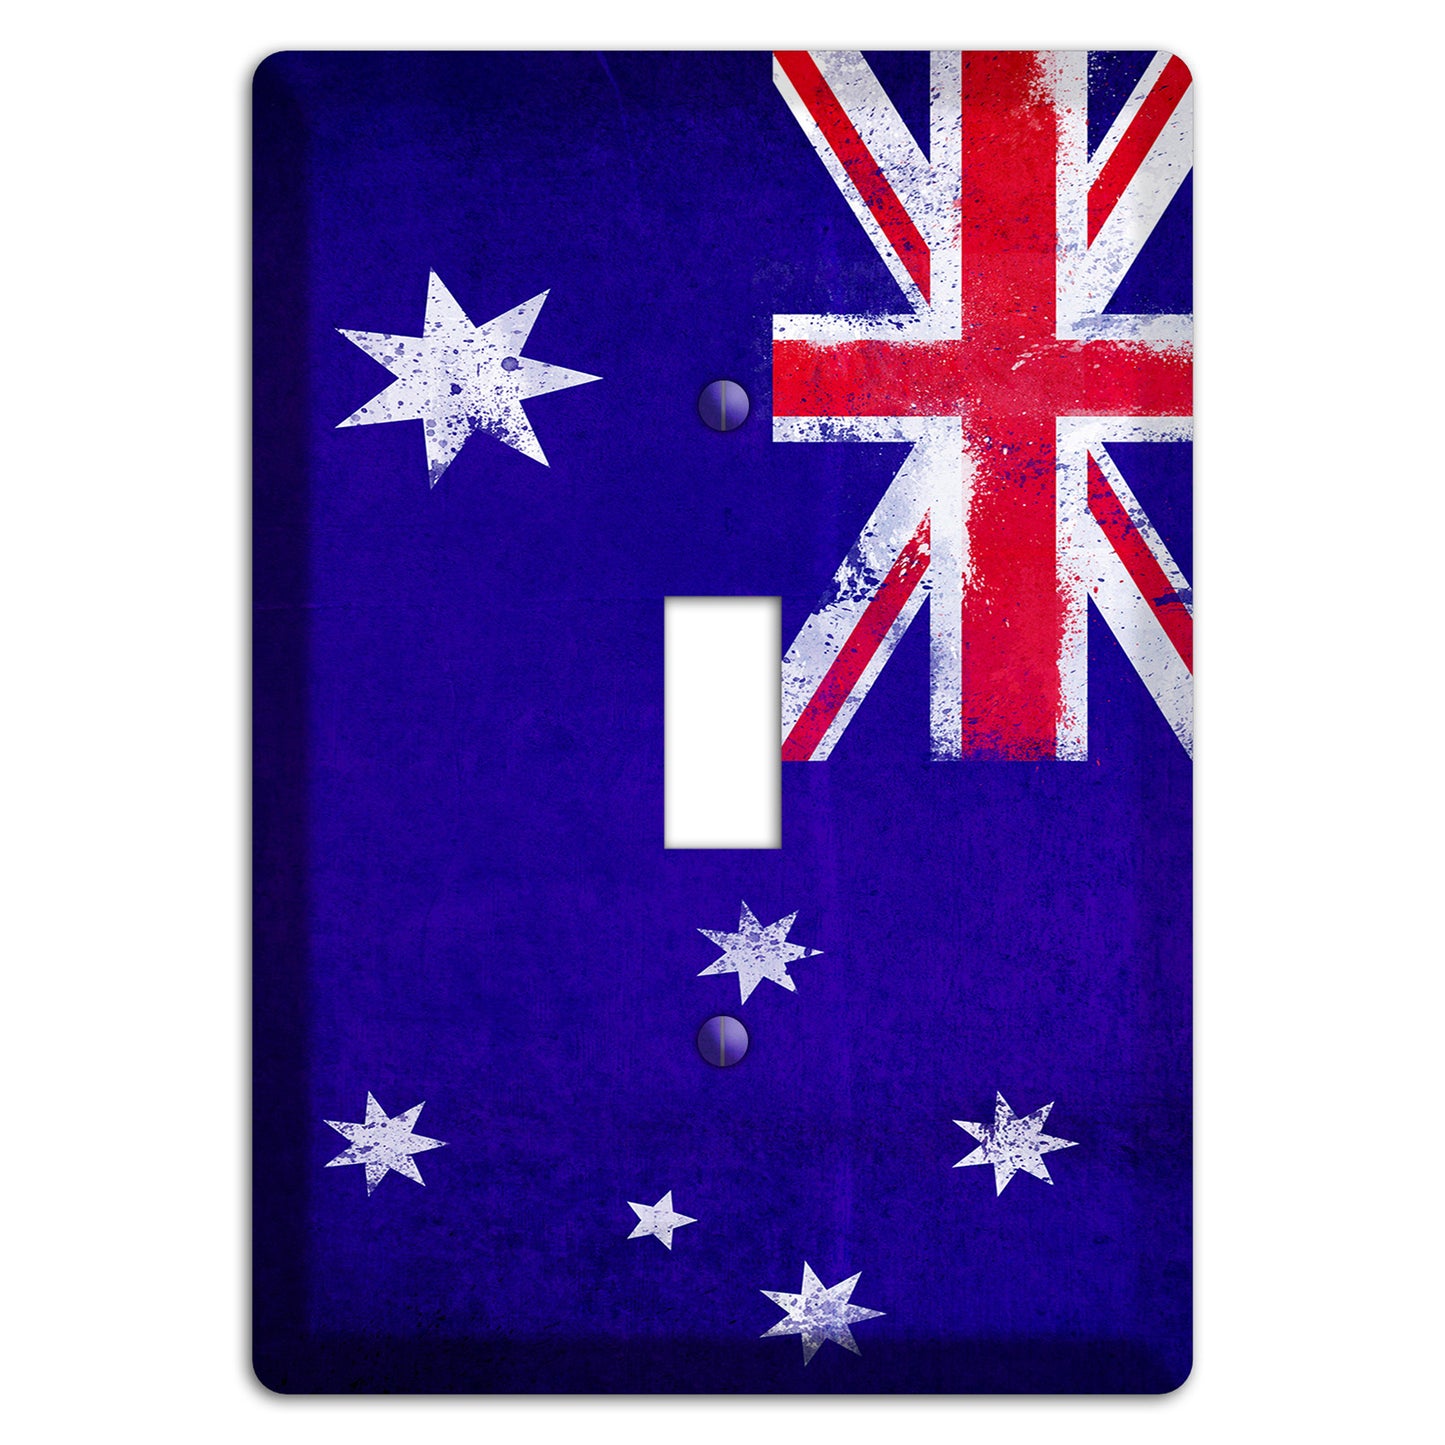 Australia Cover Plates Cover Plates